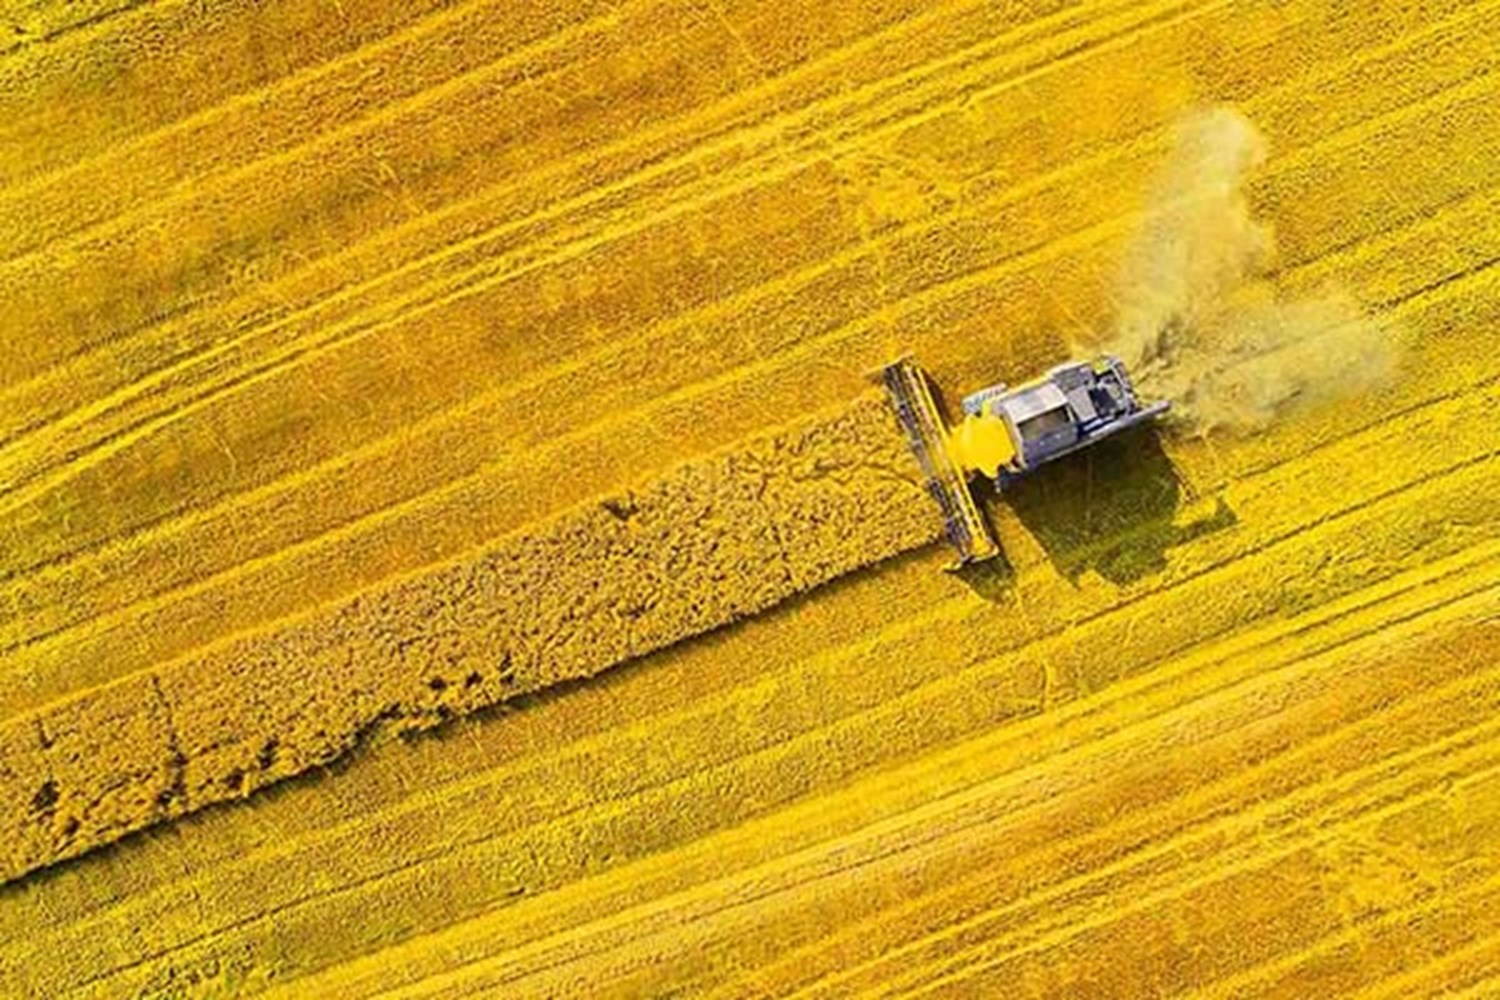 combine harvester in wheat field